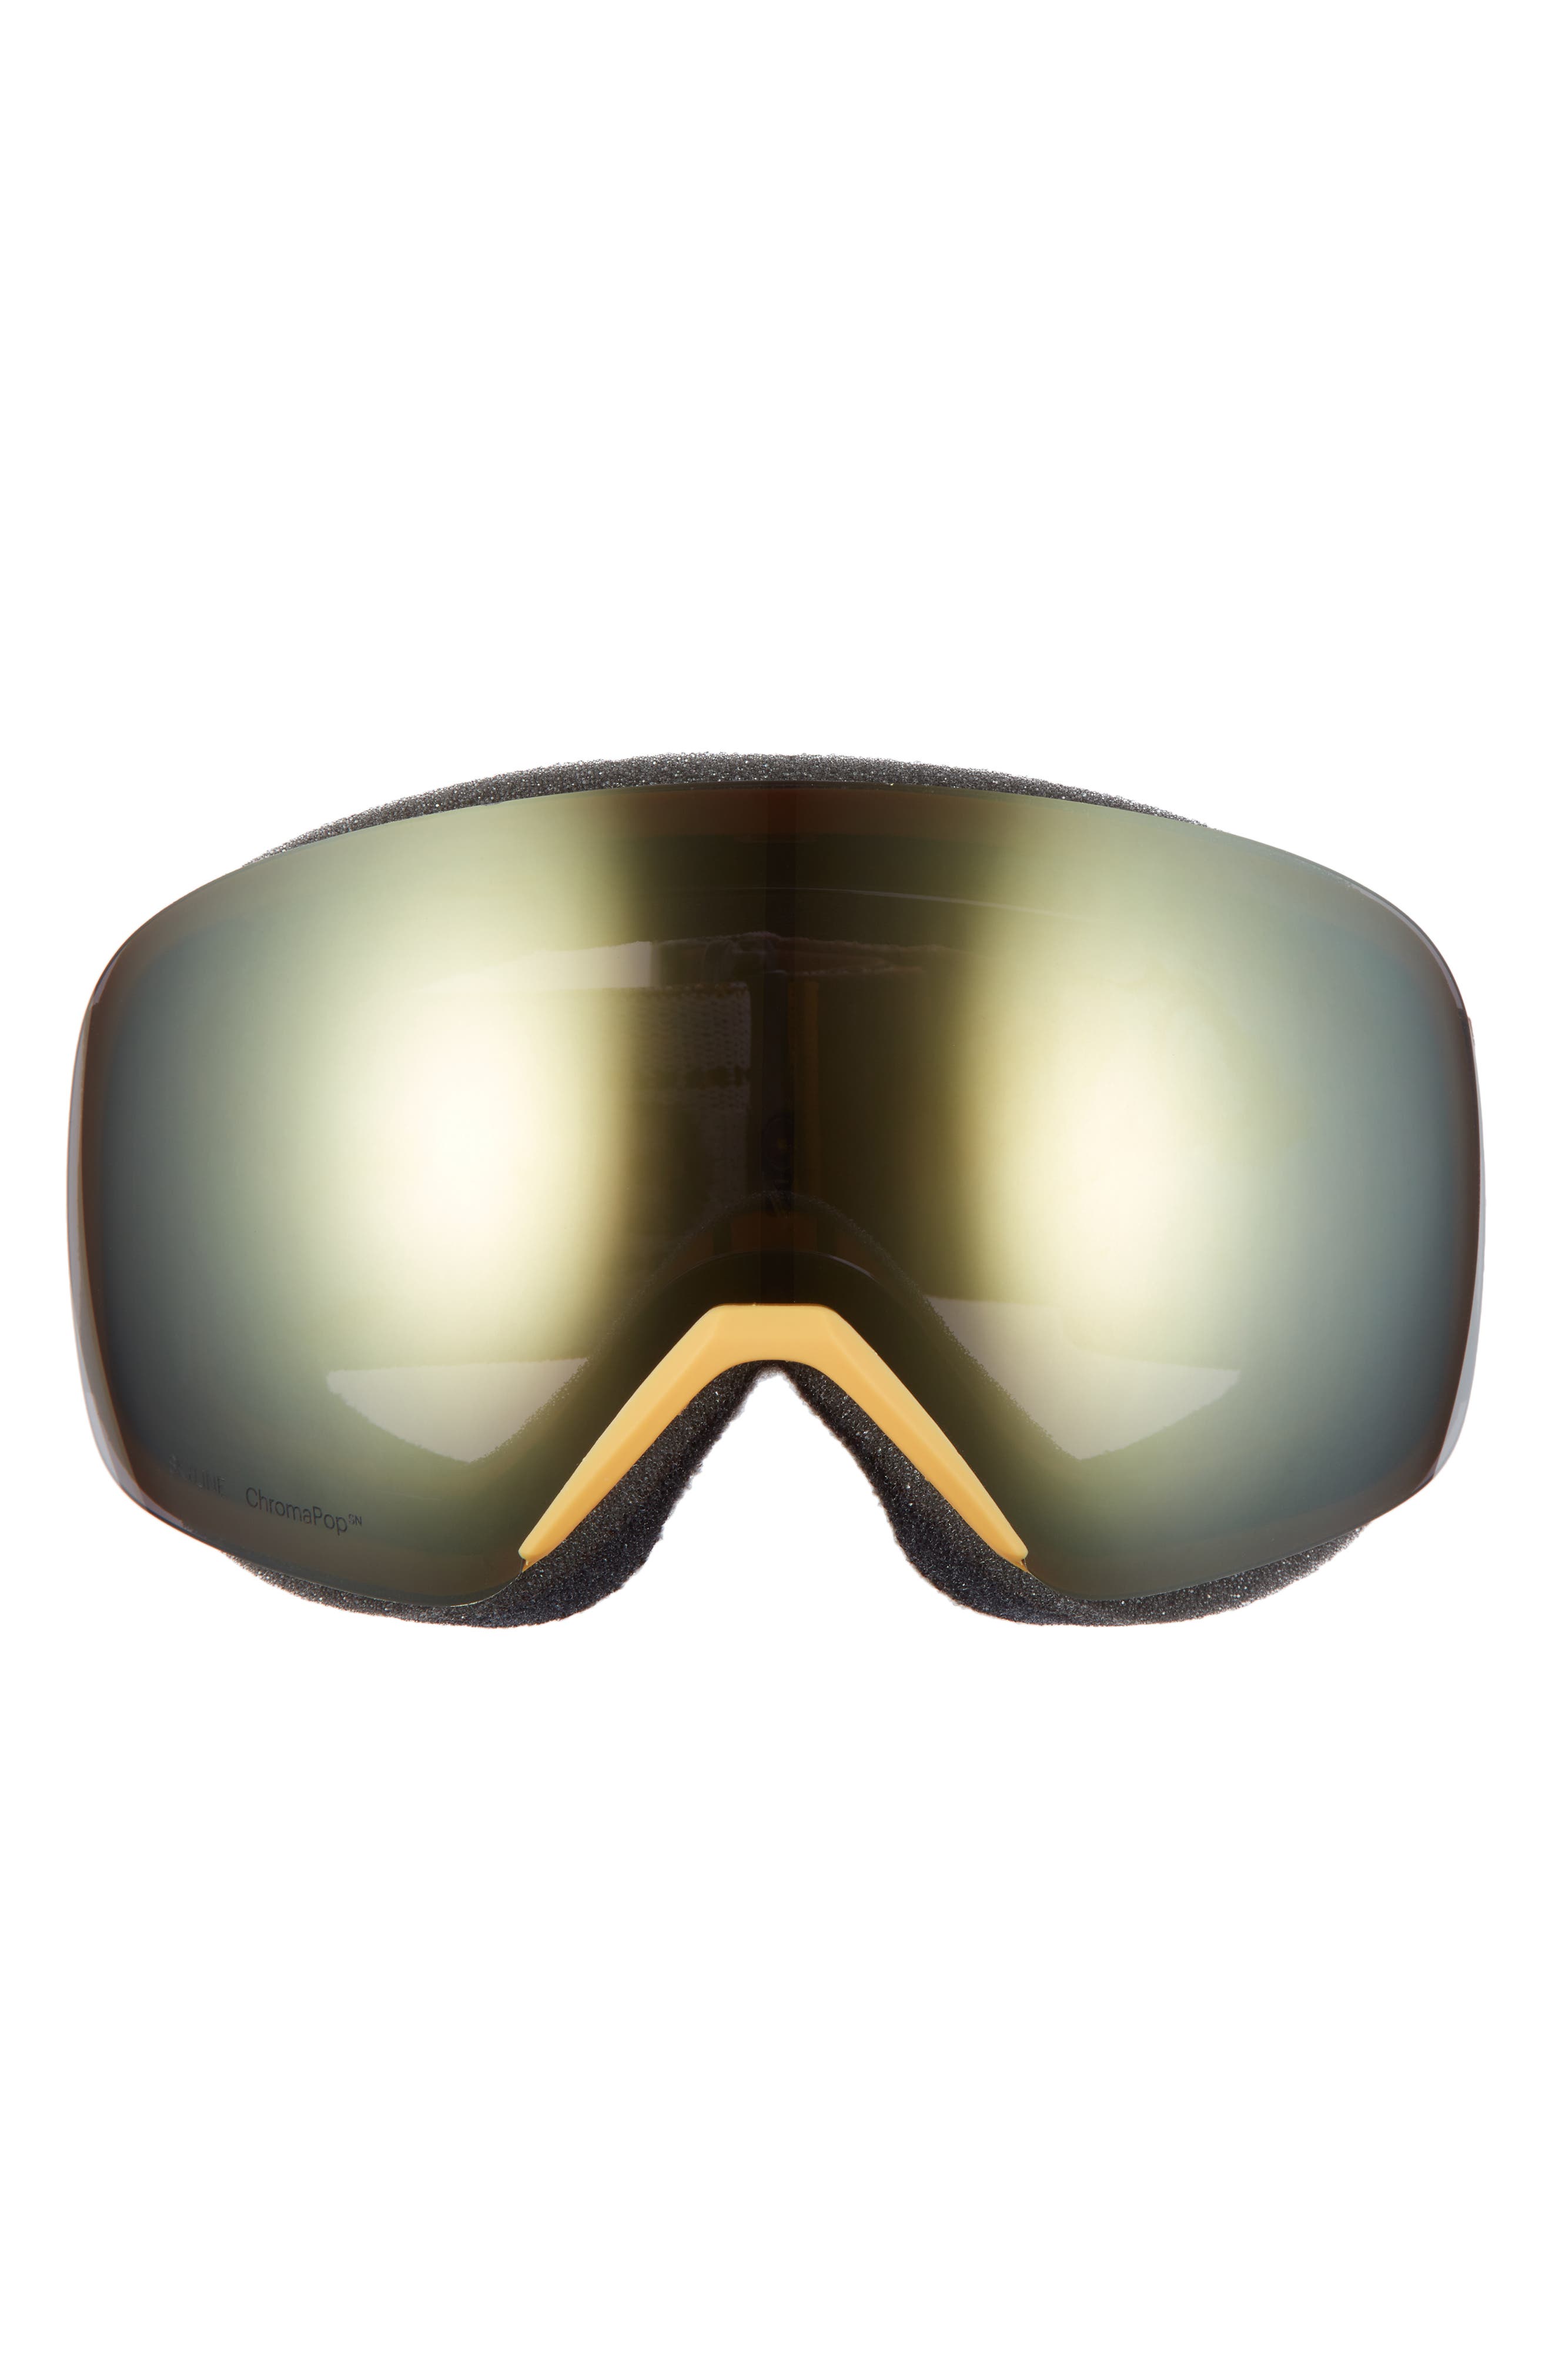 NEW Smith Skyline Asian Fit Ski Snow Goggles-Amber Textile-Black Gold Chromapop 